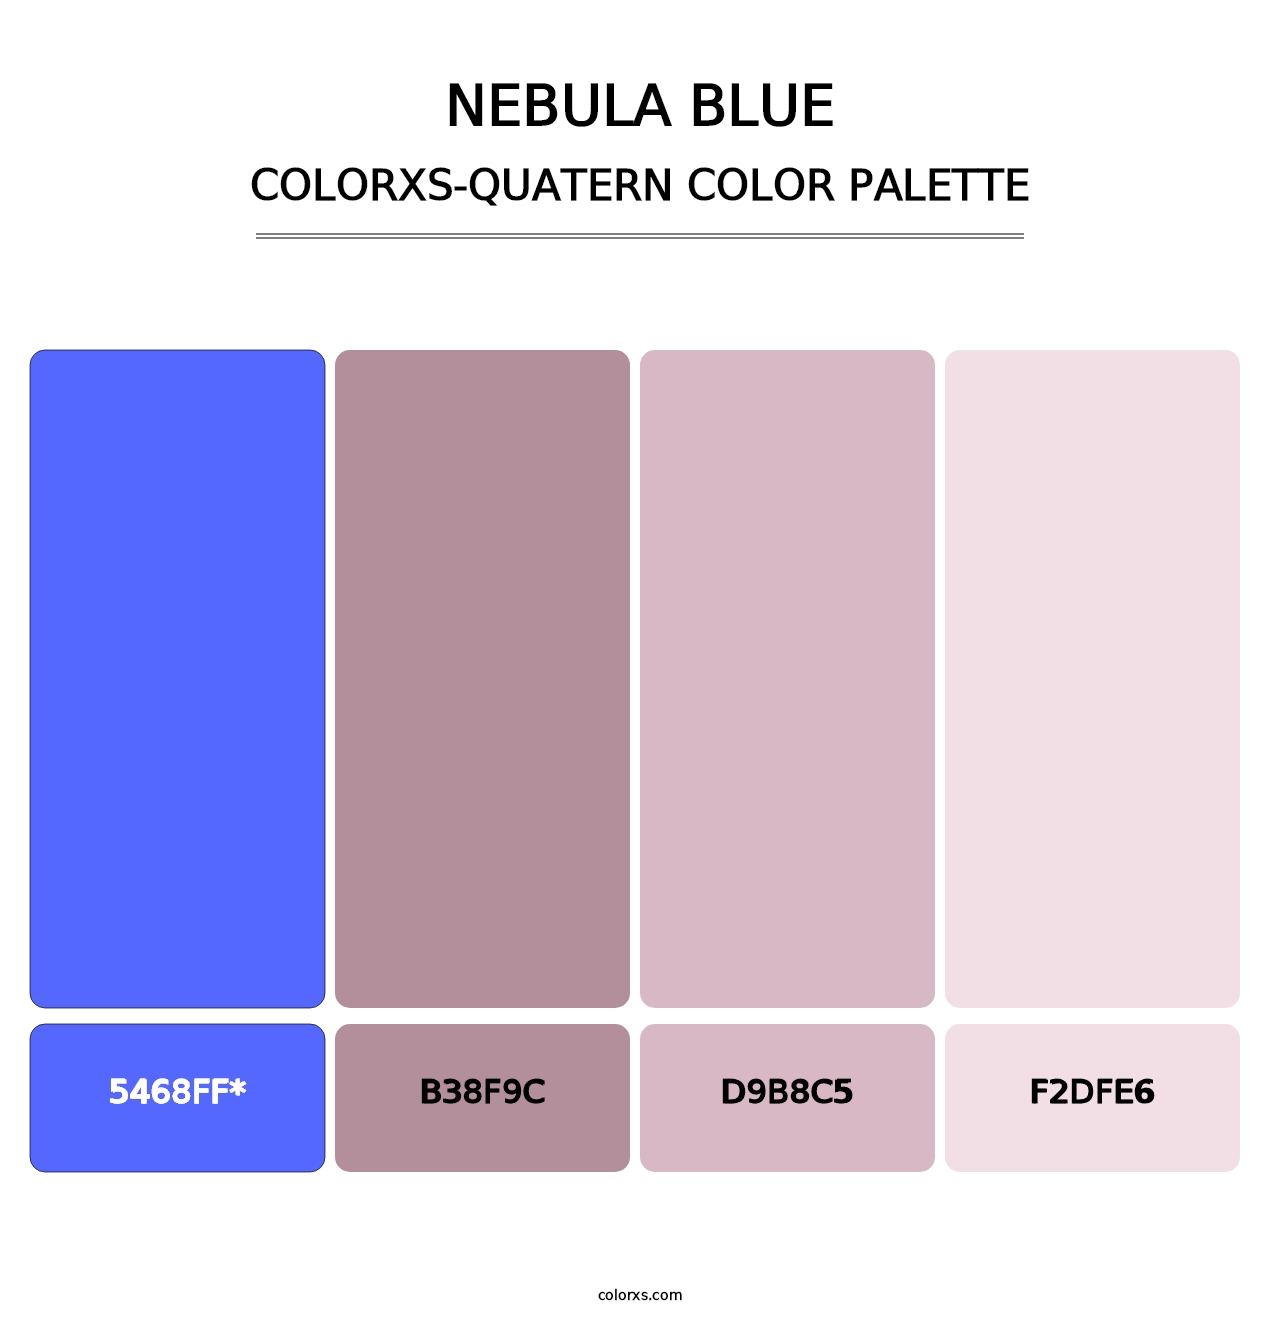 Nebula Blue - Colorxs Quatern Palette